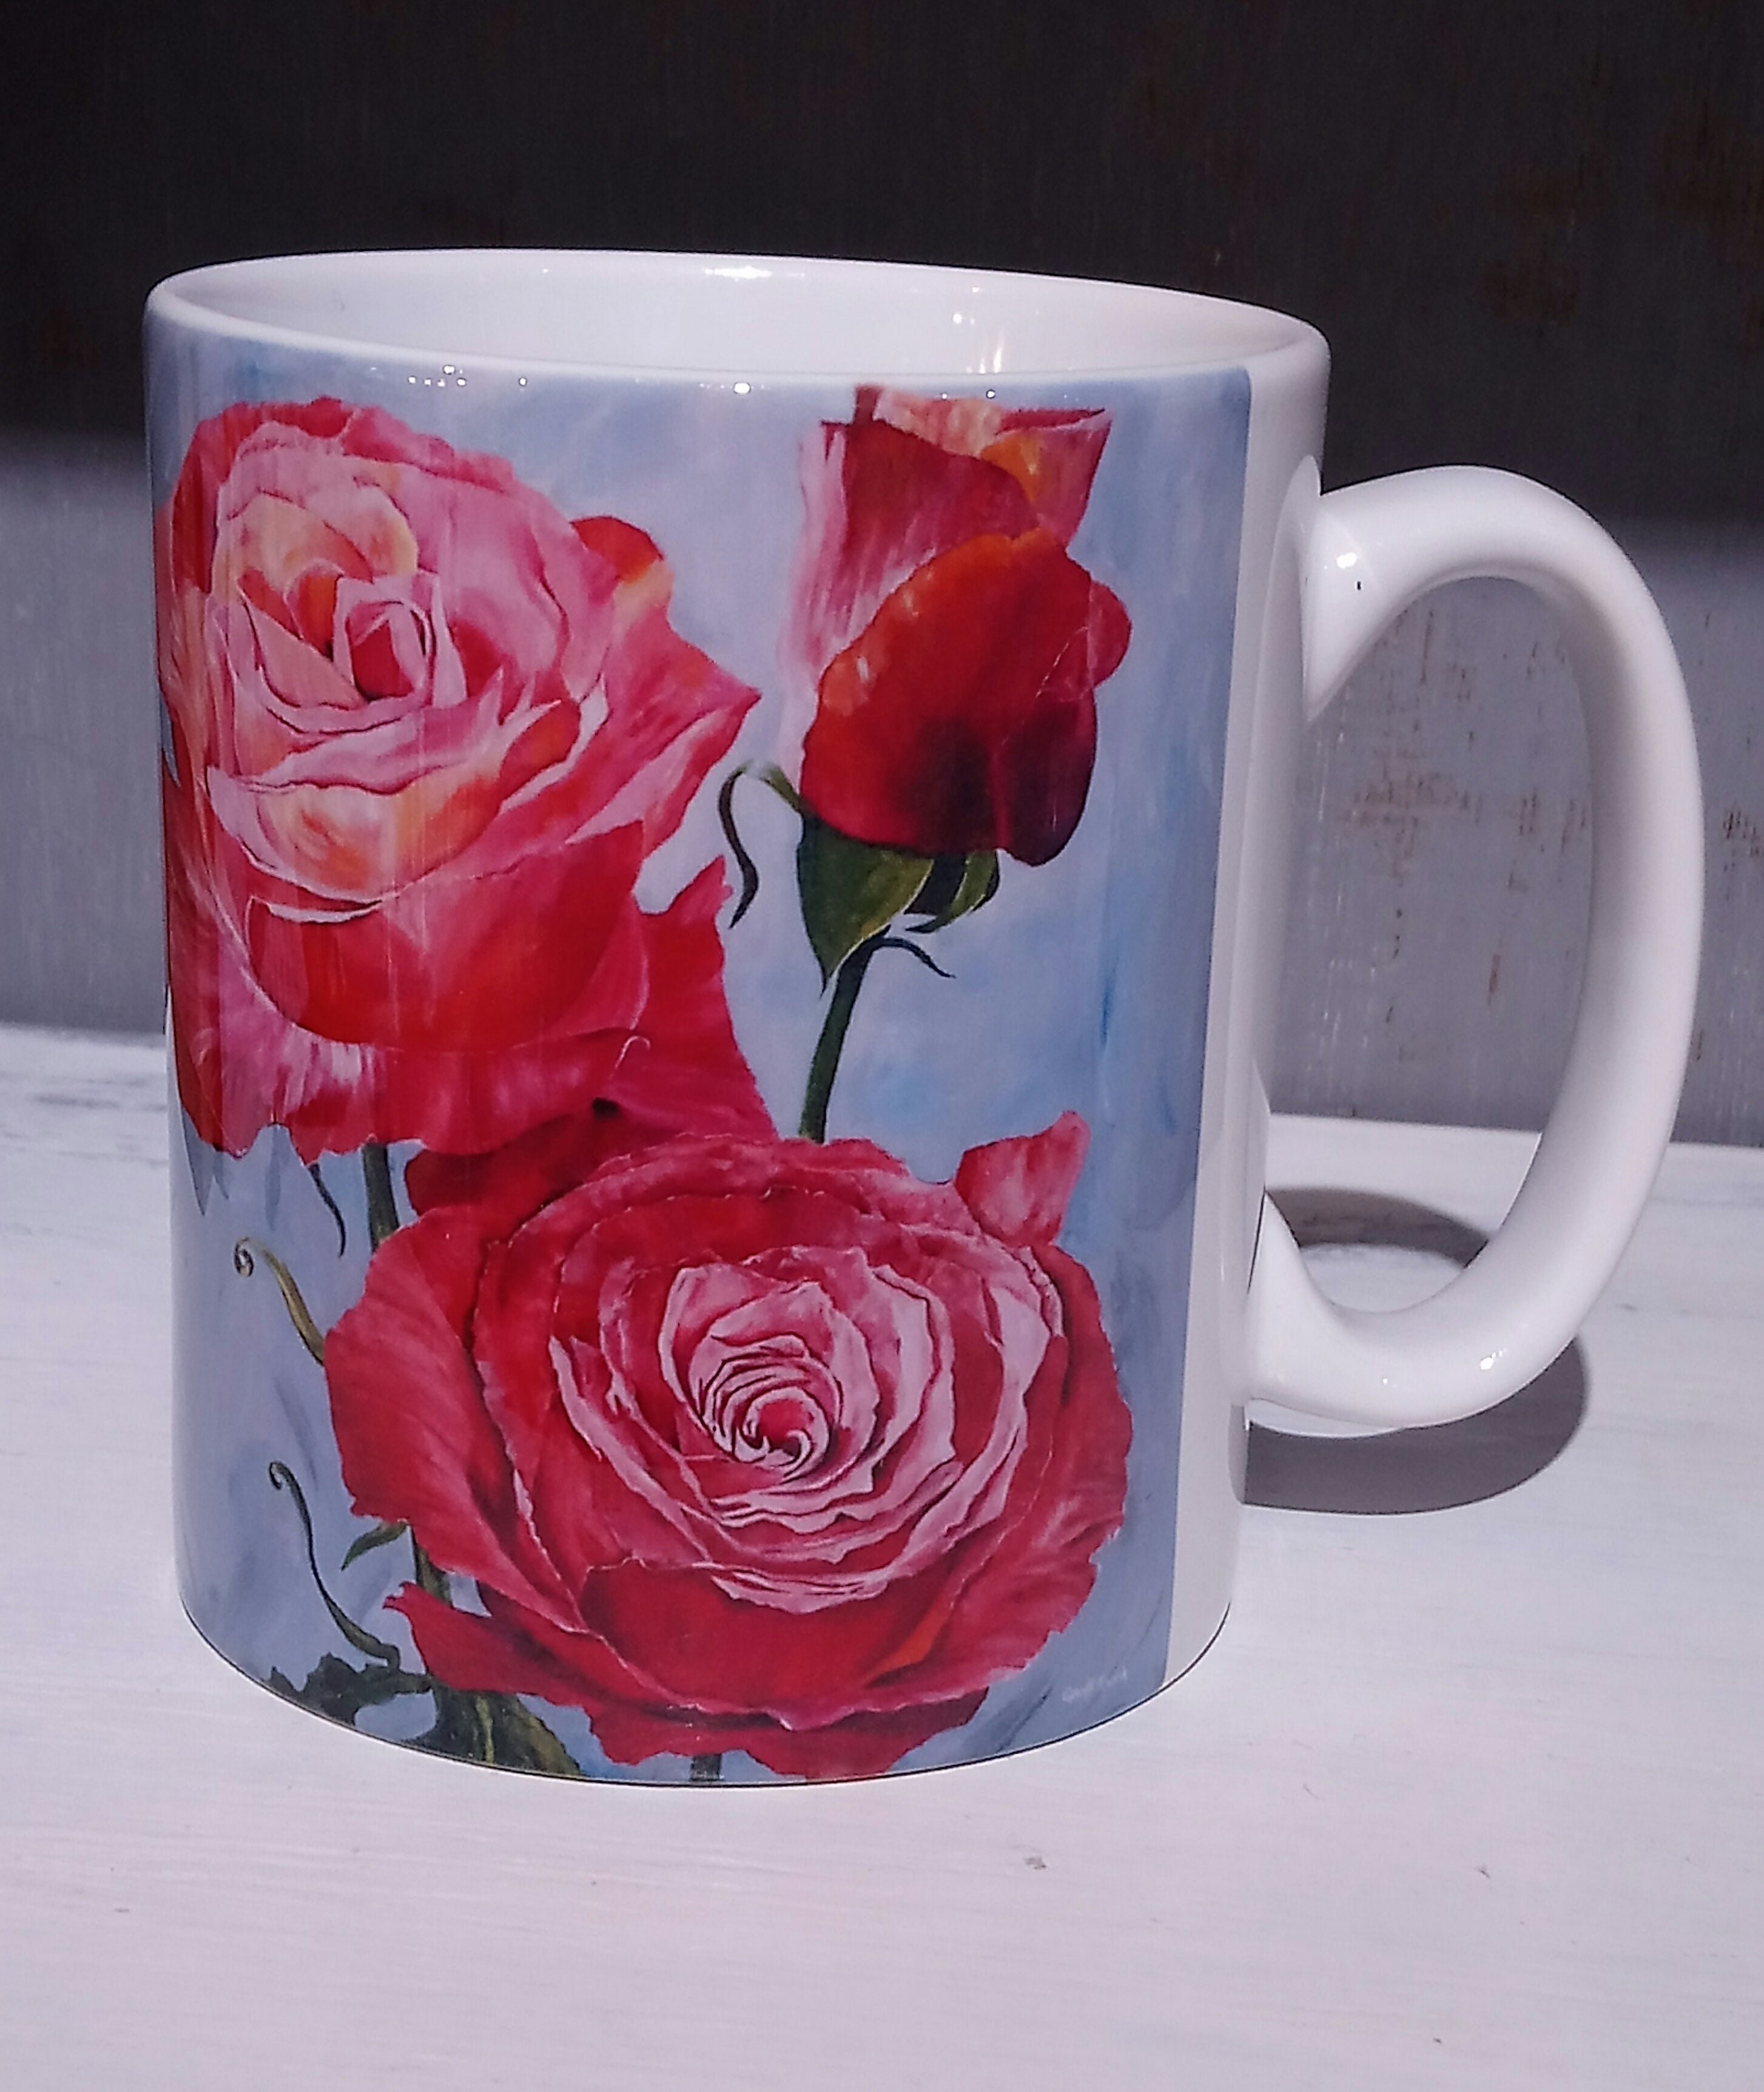 'Red Roses' Mug from Artist Geoff Foord